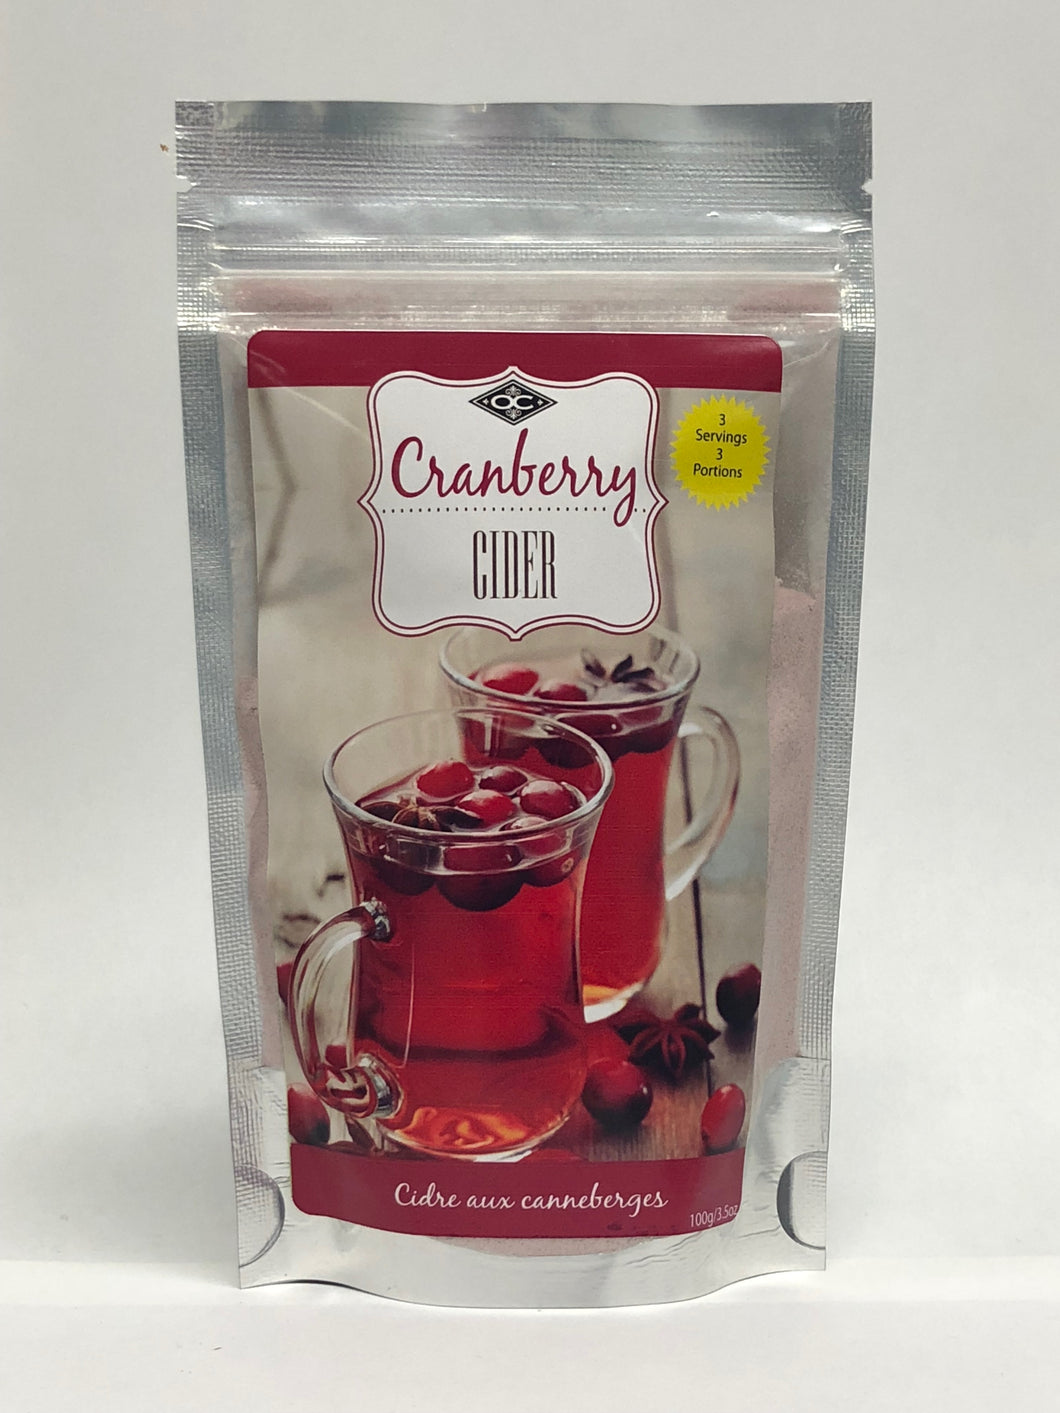 Hot Chocolate - Cranberryb Cider - 100 Gram Pouch